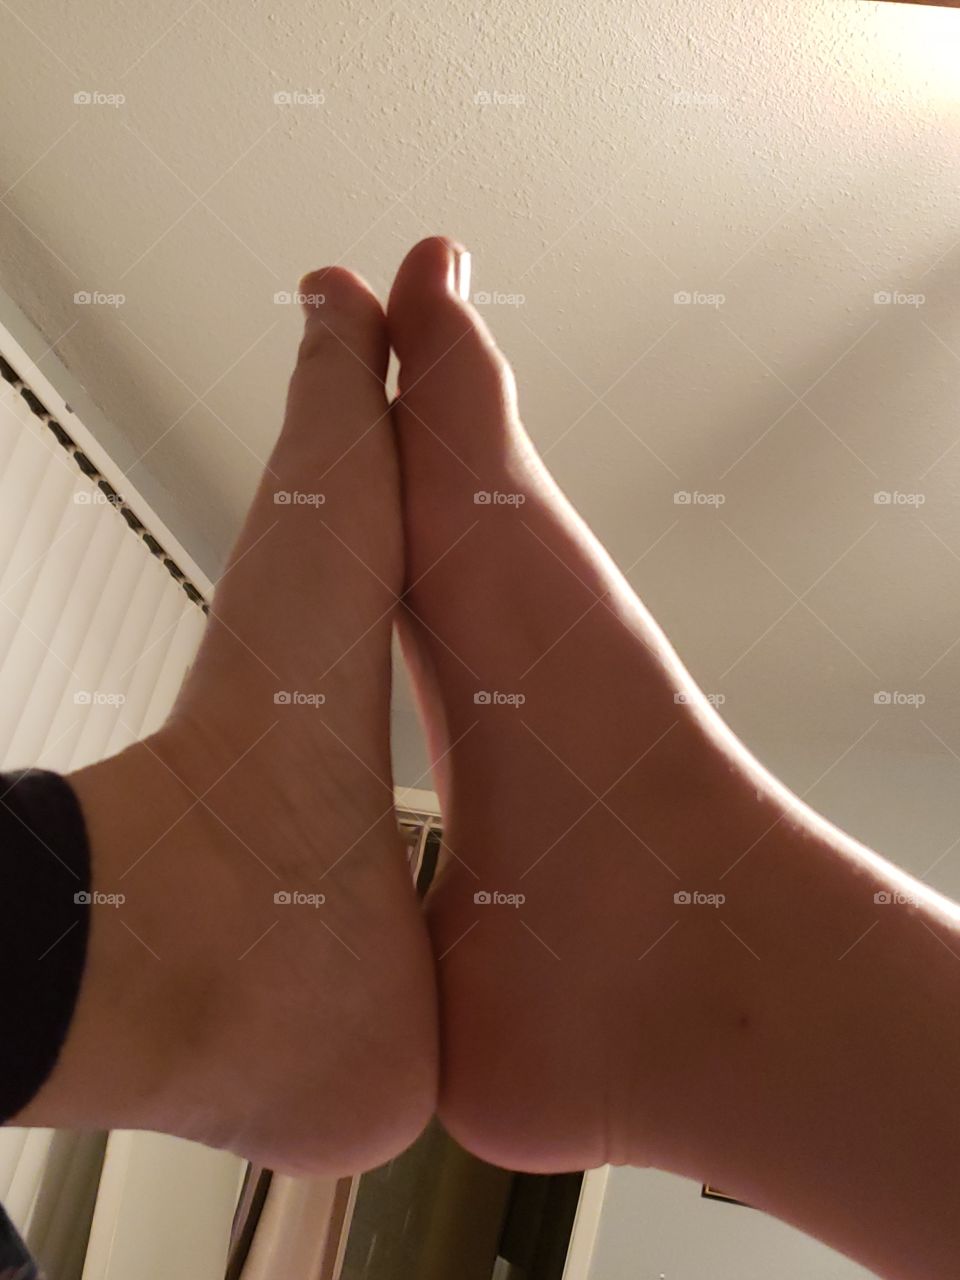 feet to feet